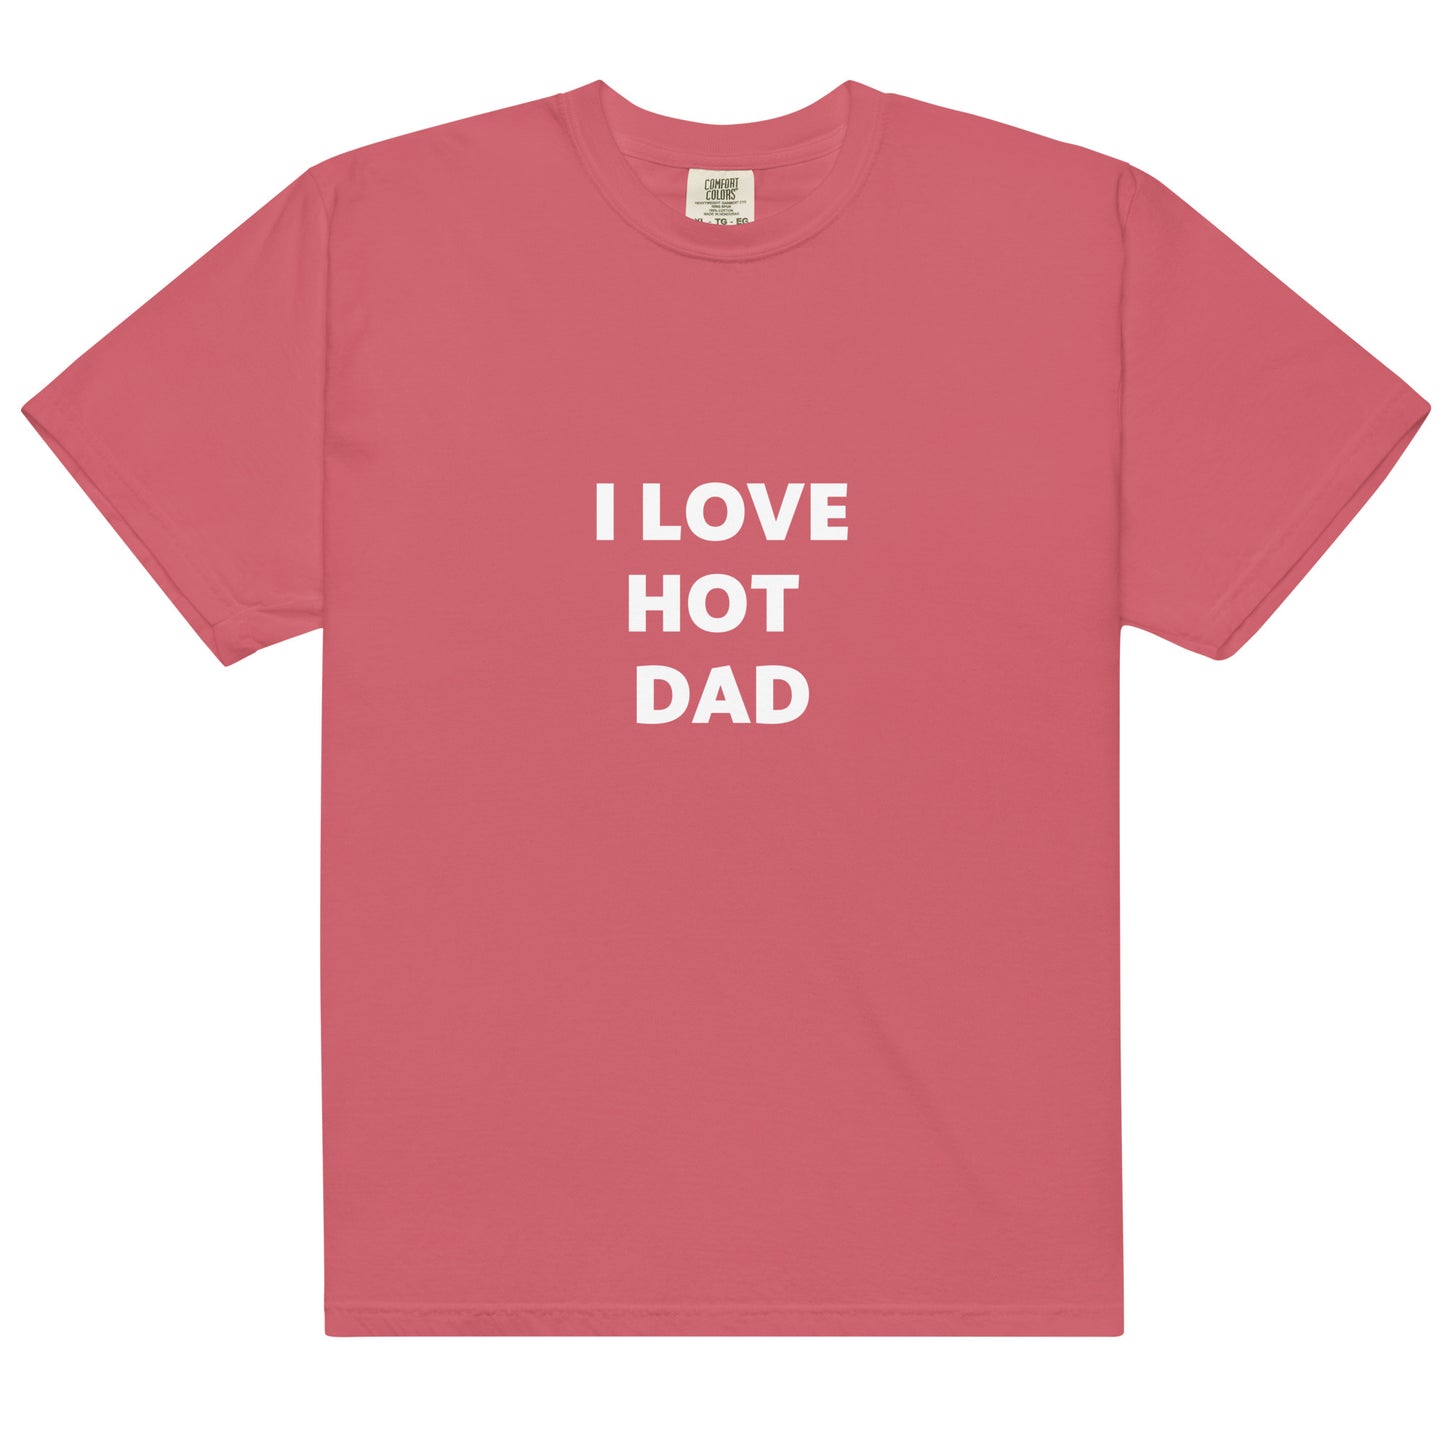 I Love Hot Dad Printed Tshirts